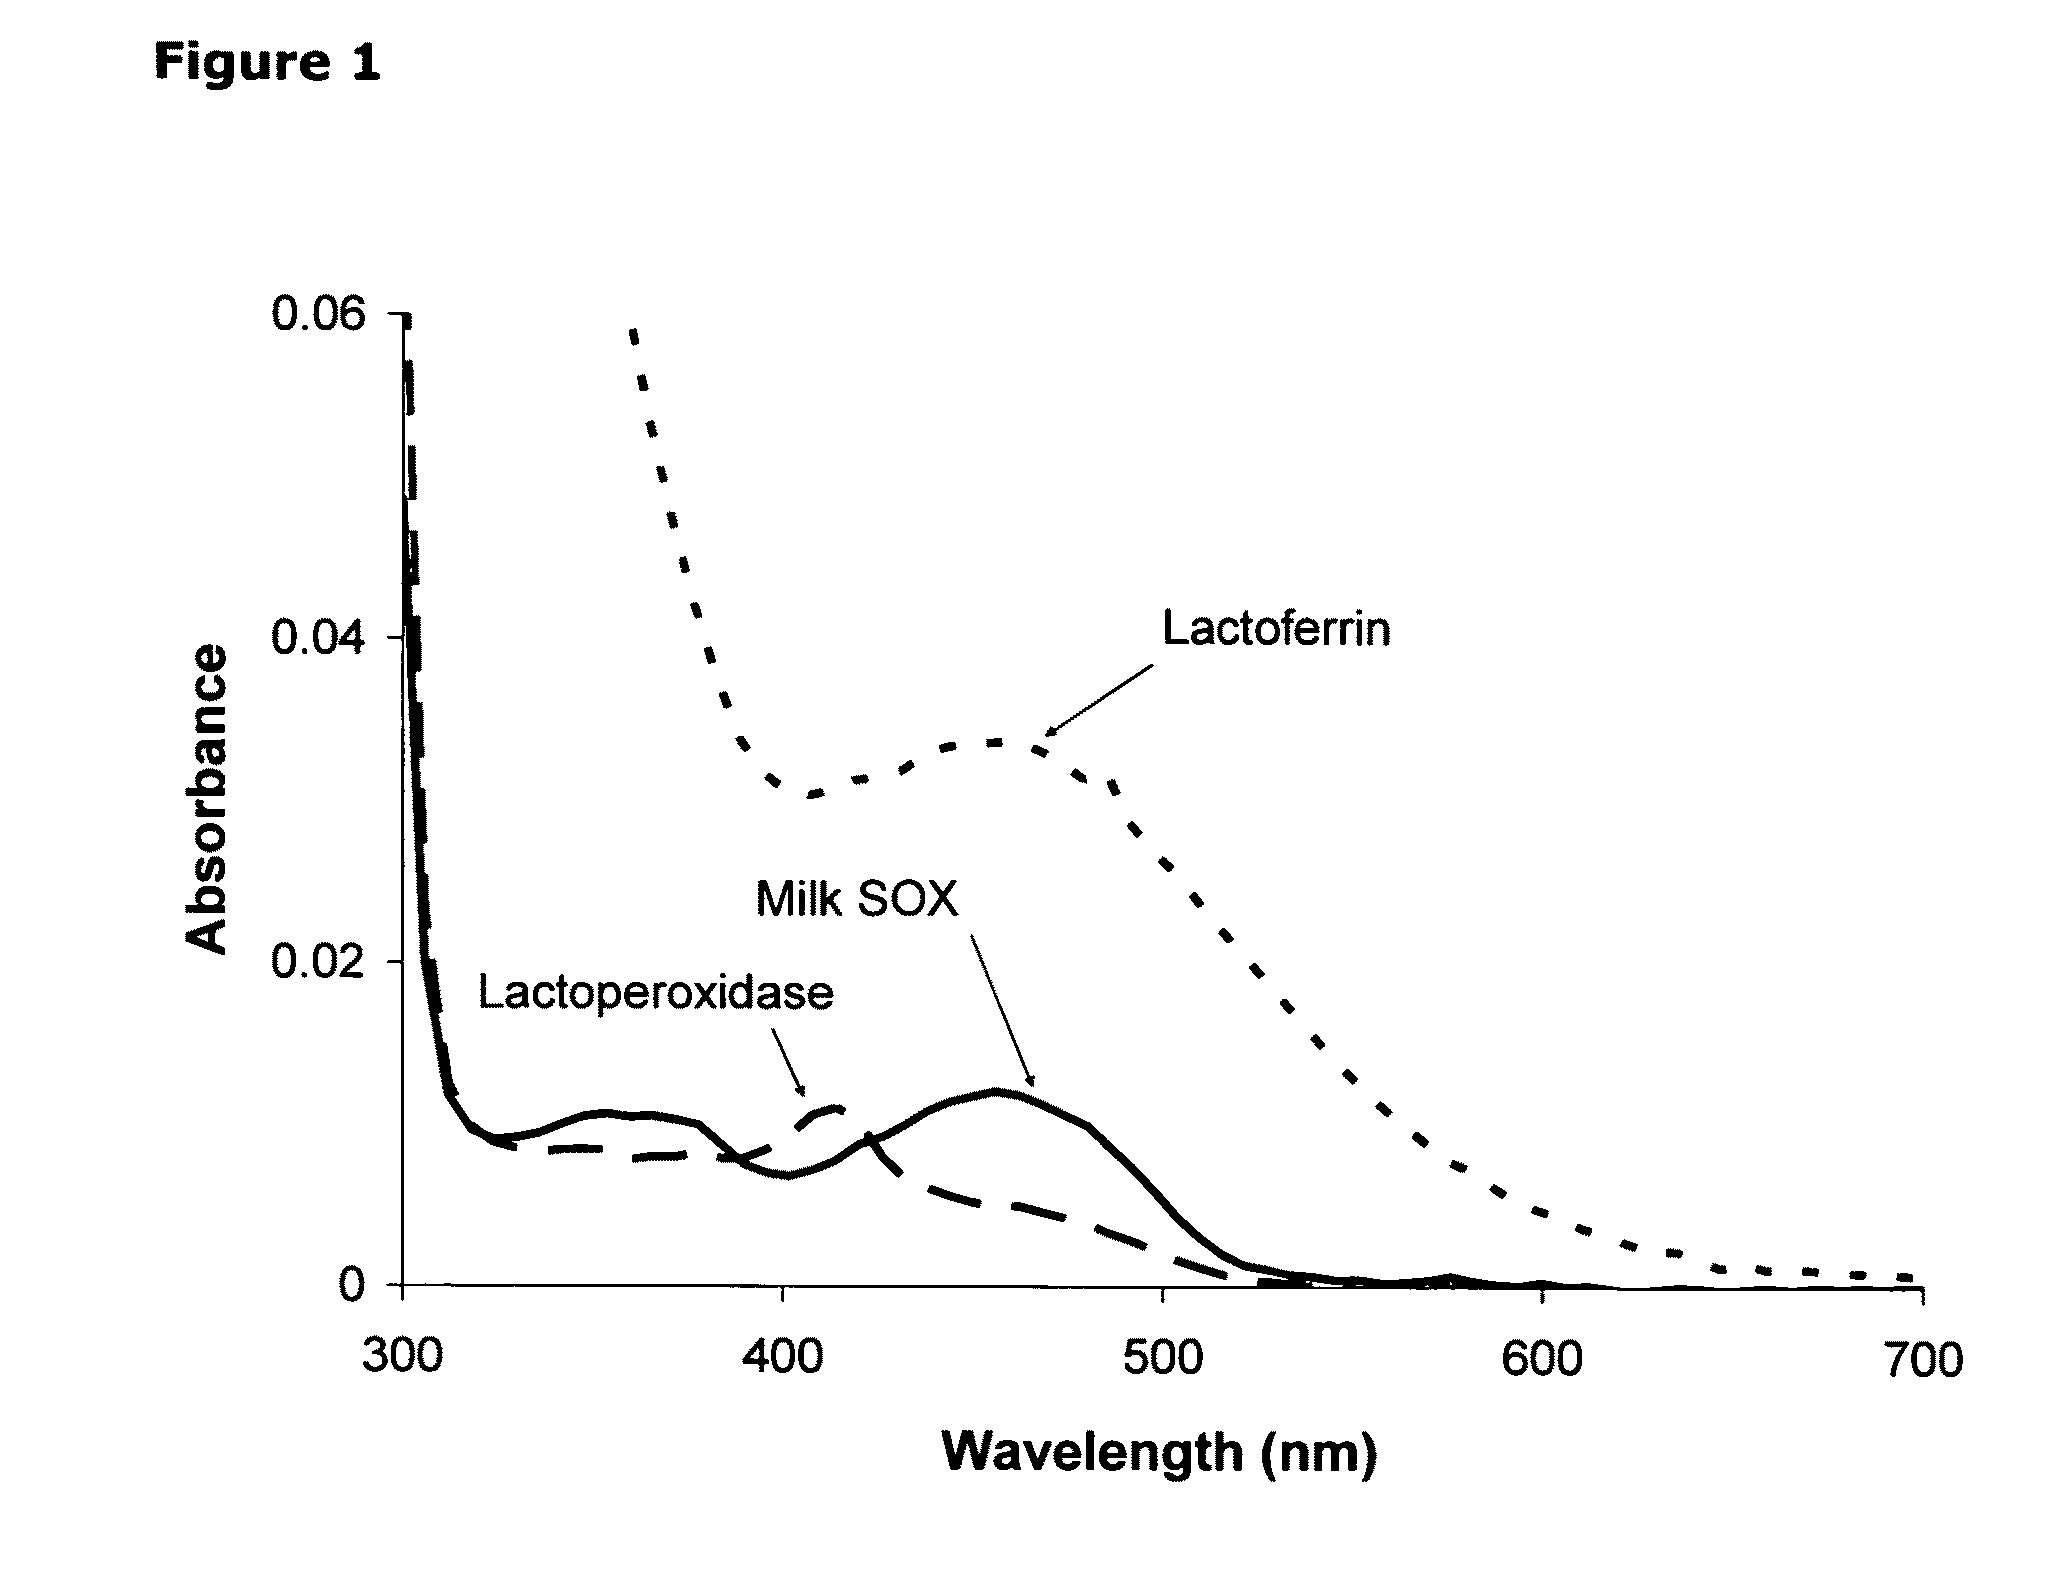 Isolation of quiescin-sulfhydryl oxidase from milk